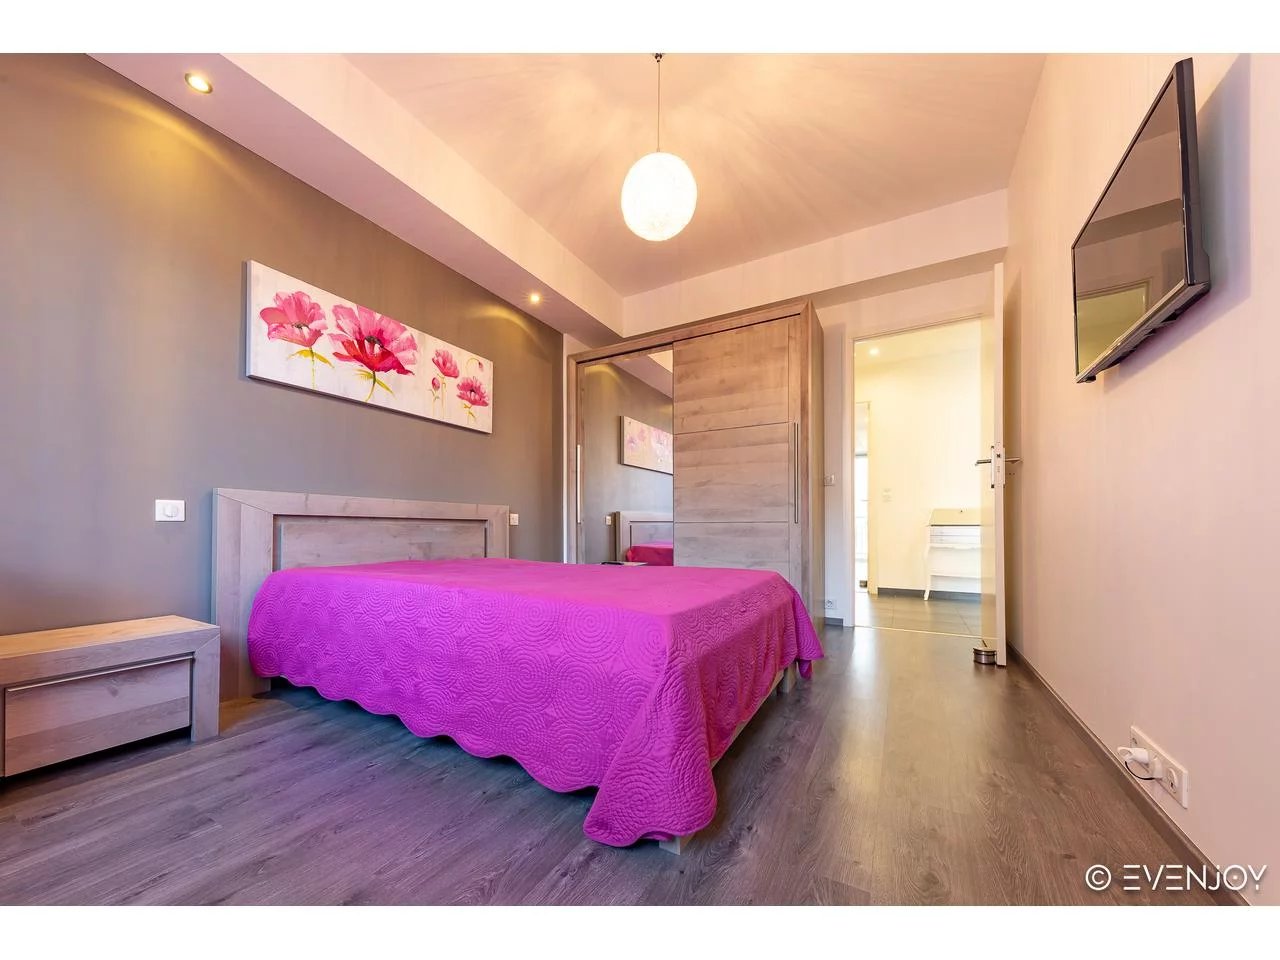 Appartement  2 Locali 50.48m2  In vendita   325 000 €